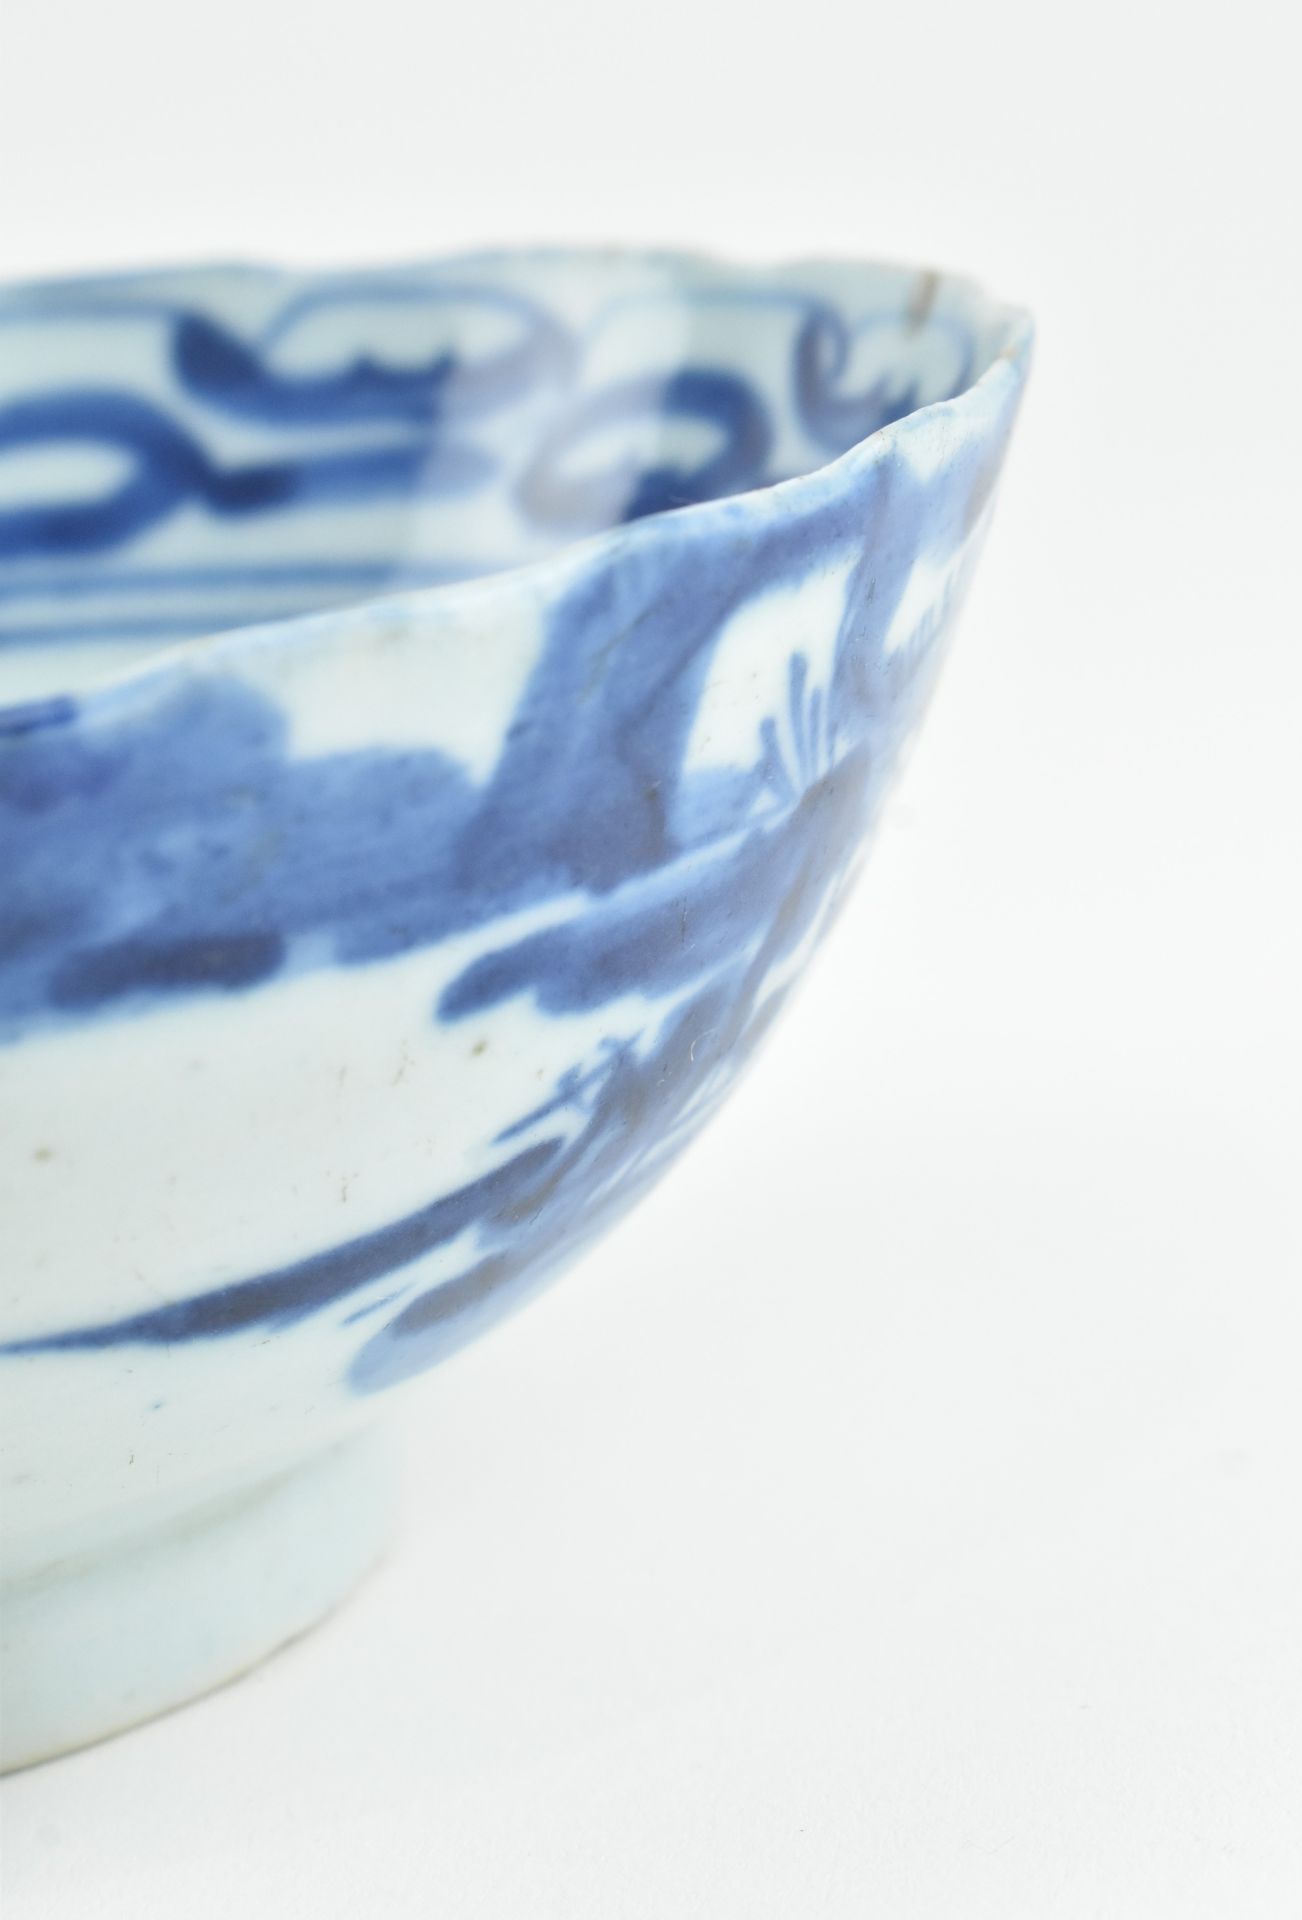 QING DYNASTY BLUE AND WHITE BOWL 清 青花山水碗 - Image 6 of 8